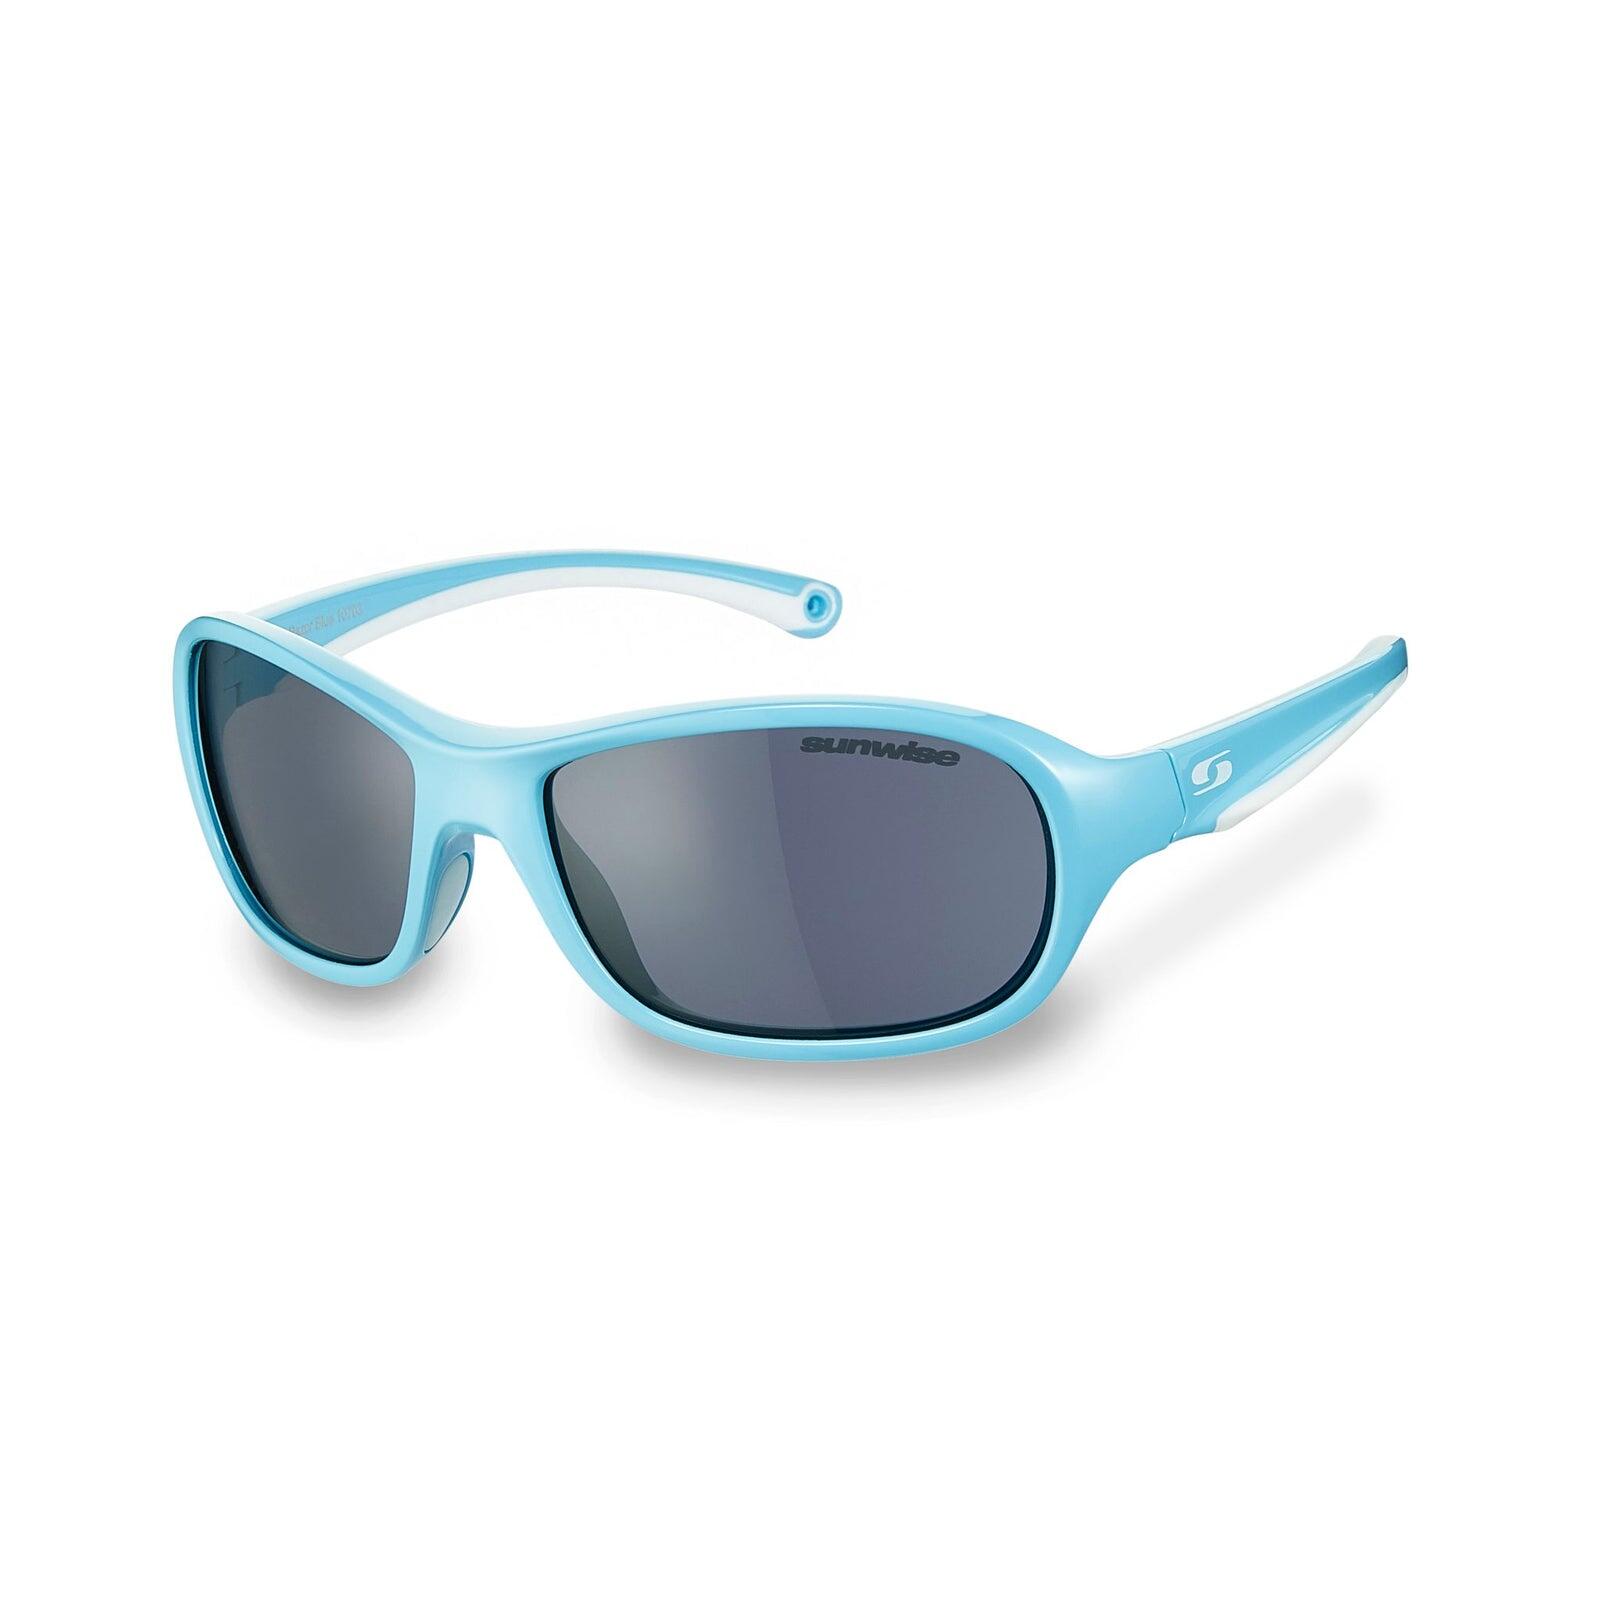 Razor Petite Sunglasses - Category 3 1/3